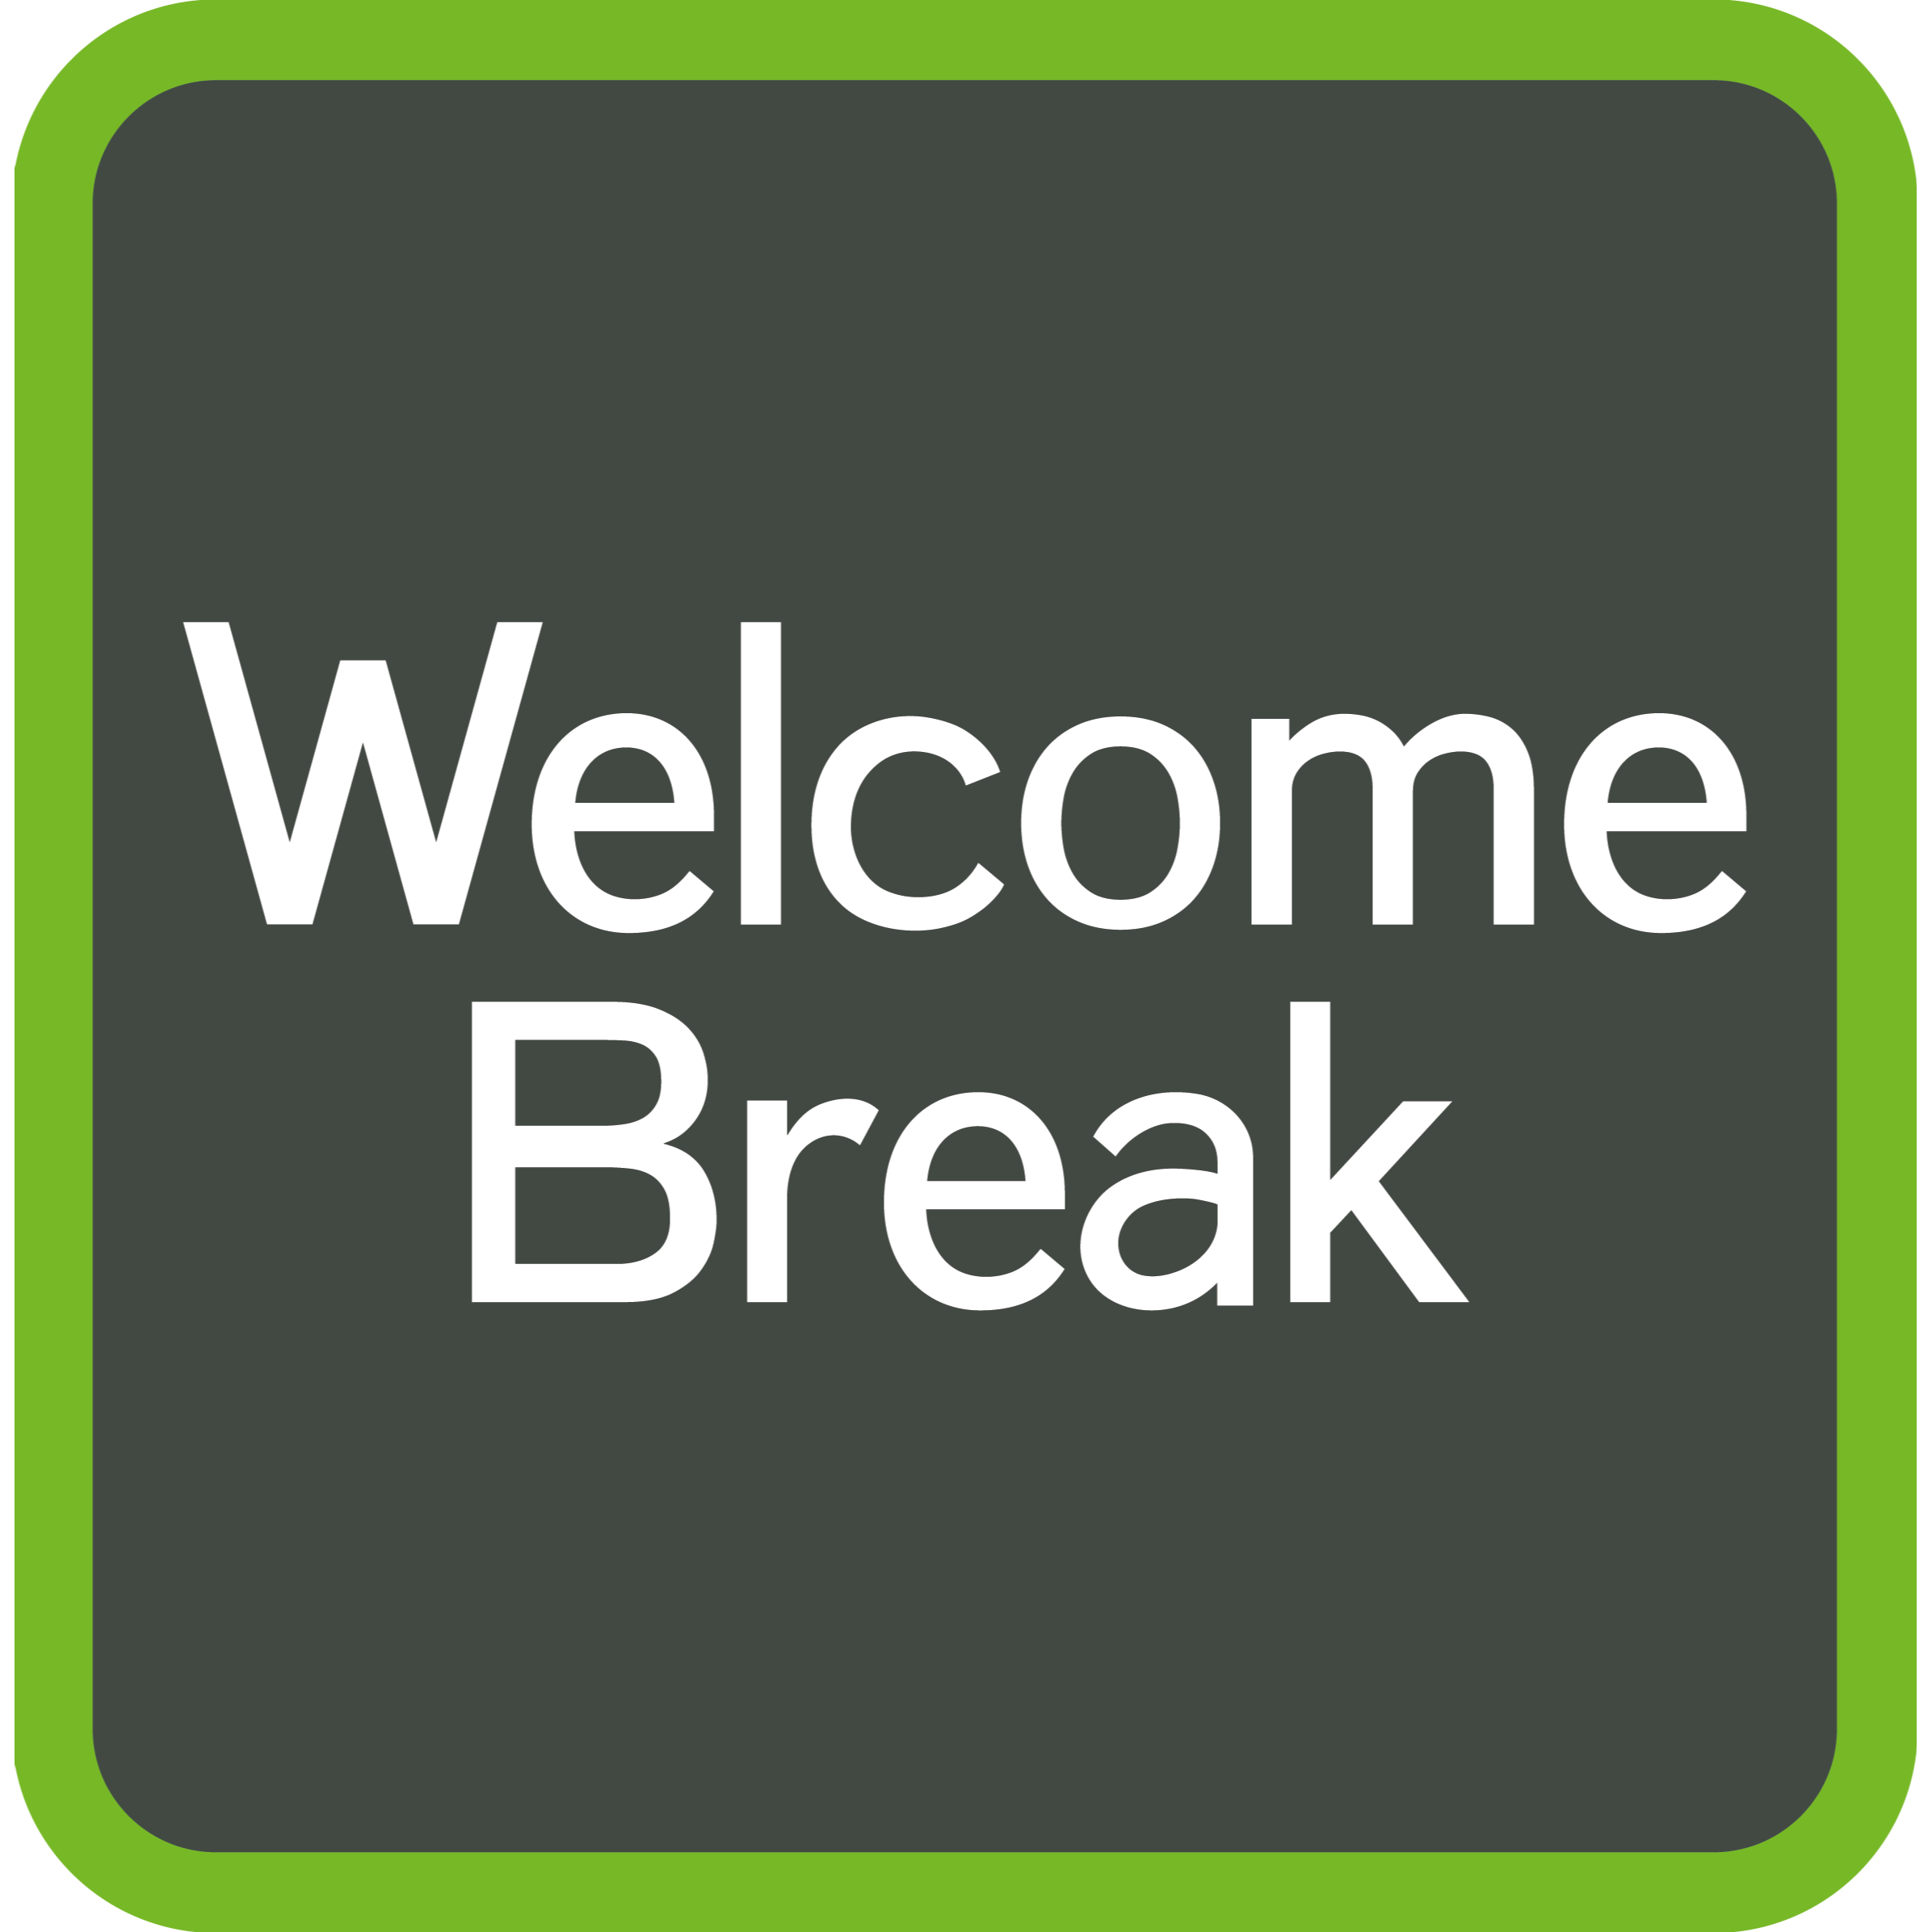 Welcome Break Logo Applegreen Biggleswade Services A1 Biggleswade 01908 299700